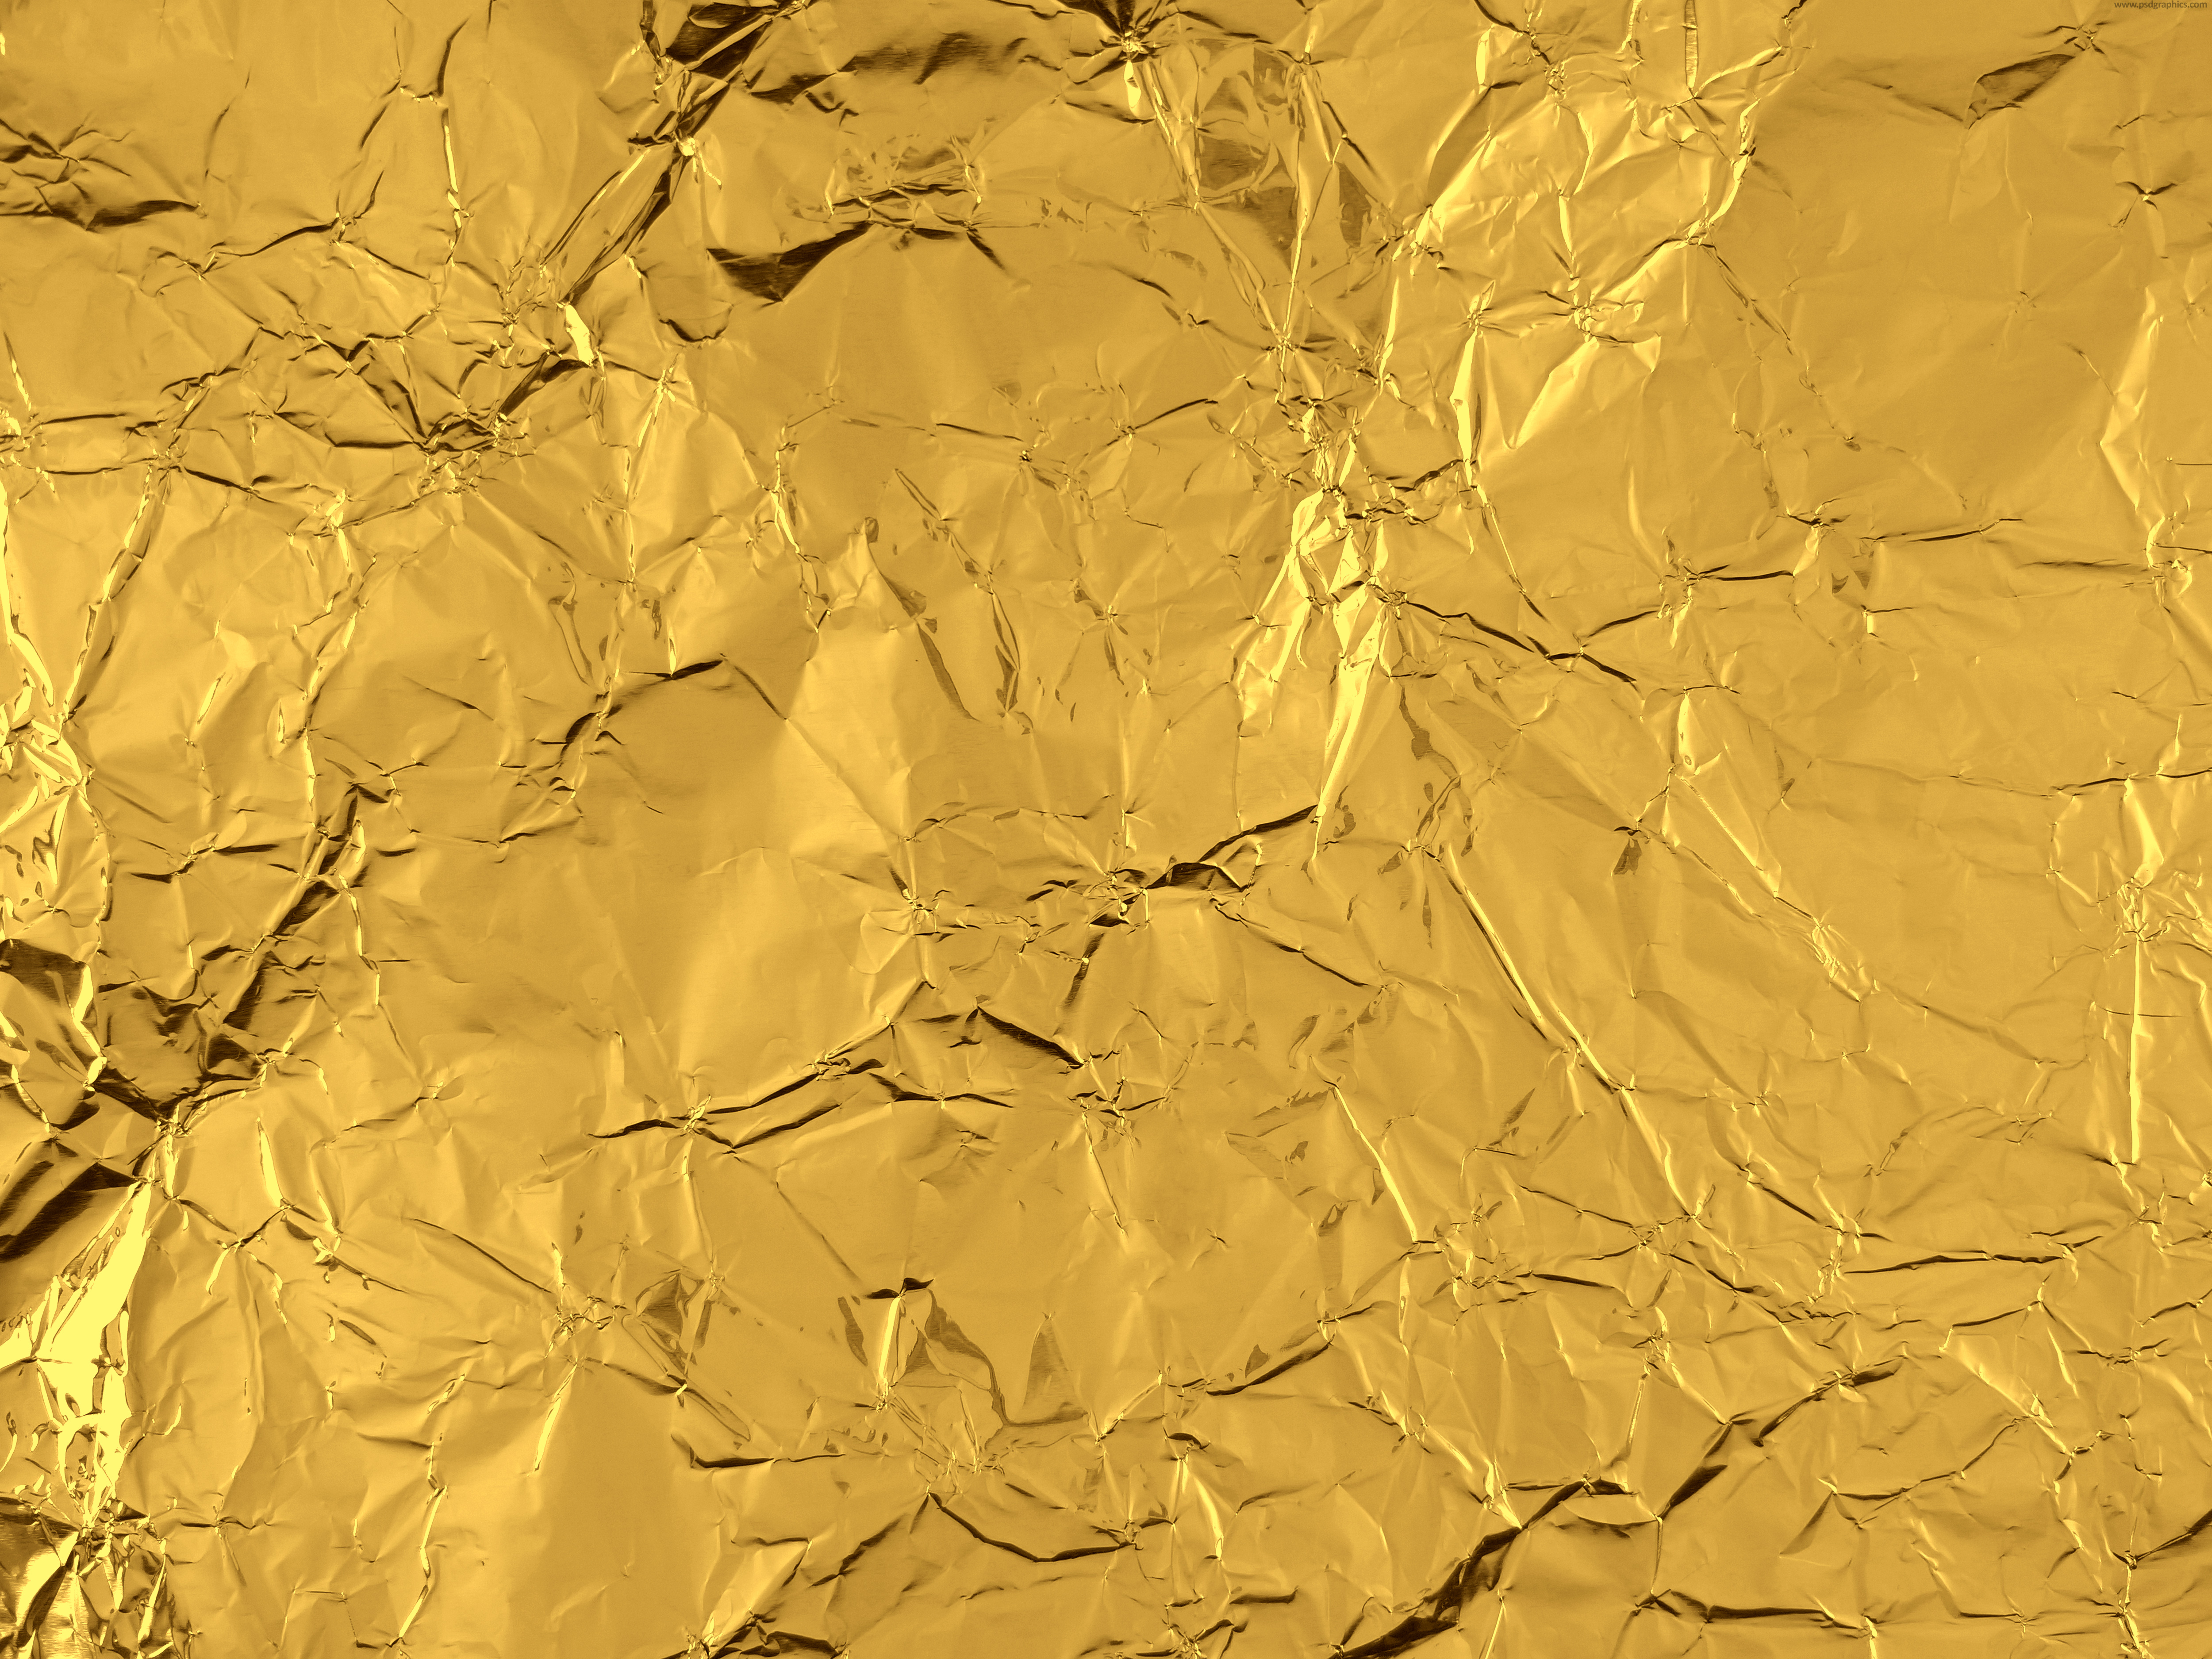 Gold texture photo